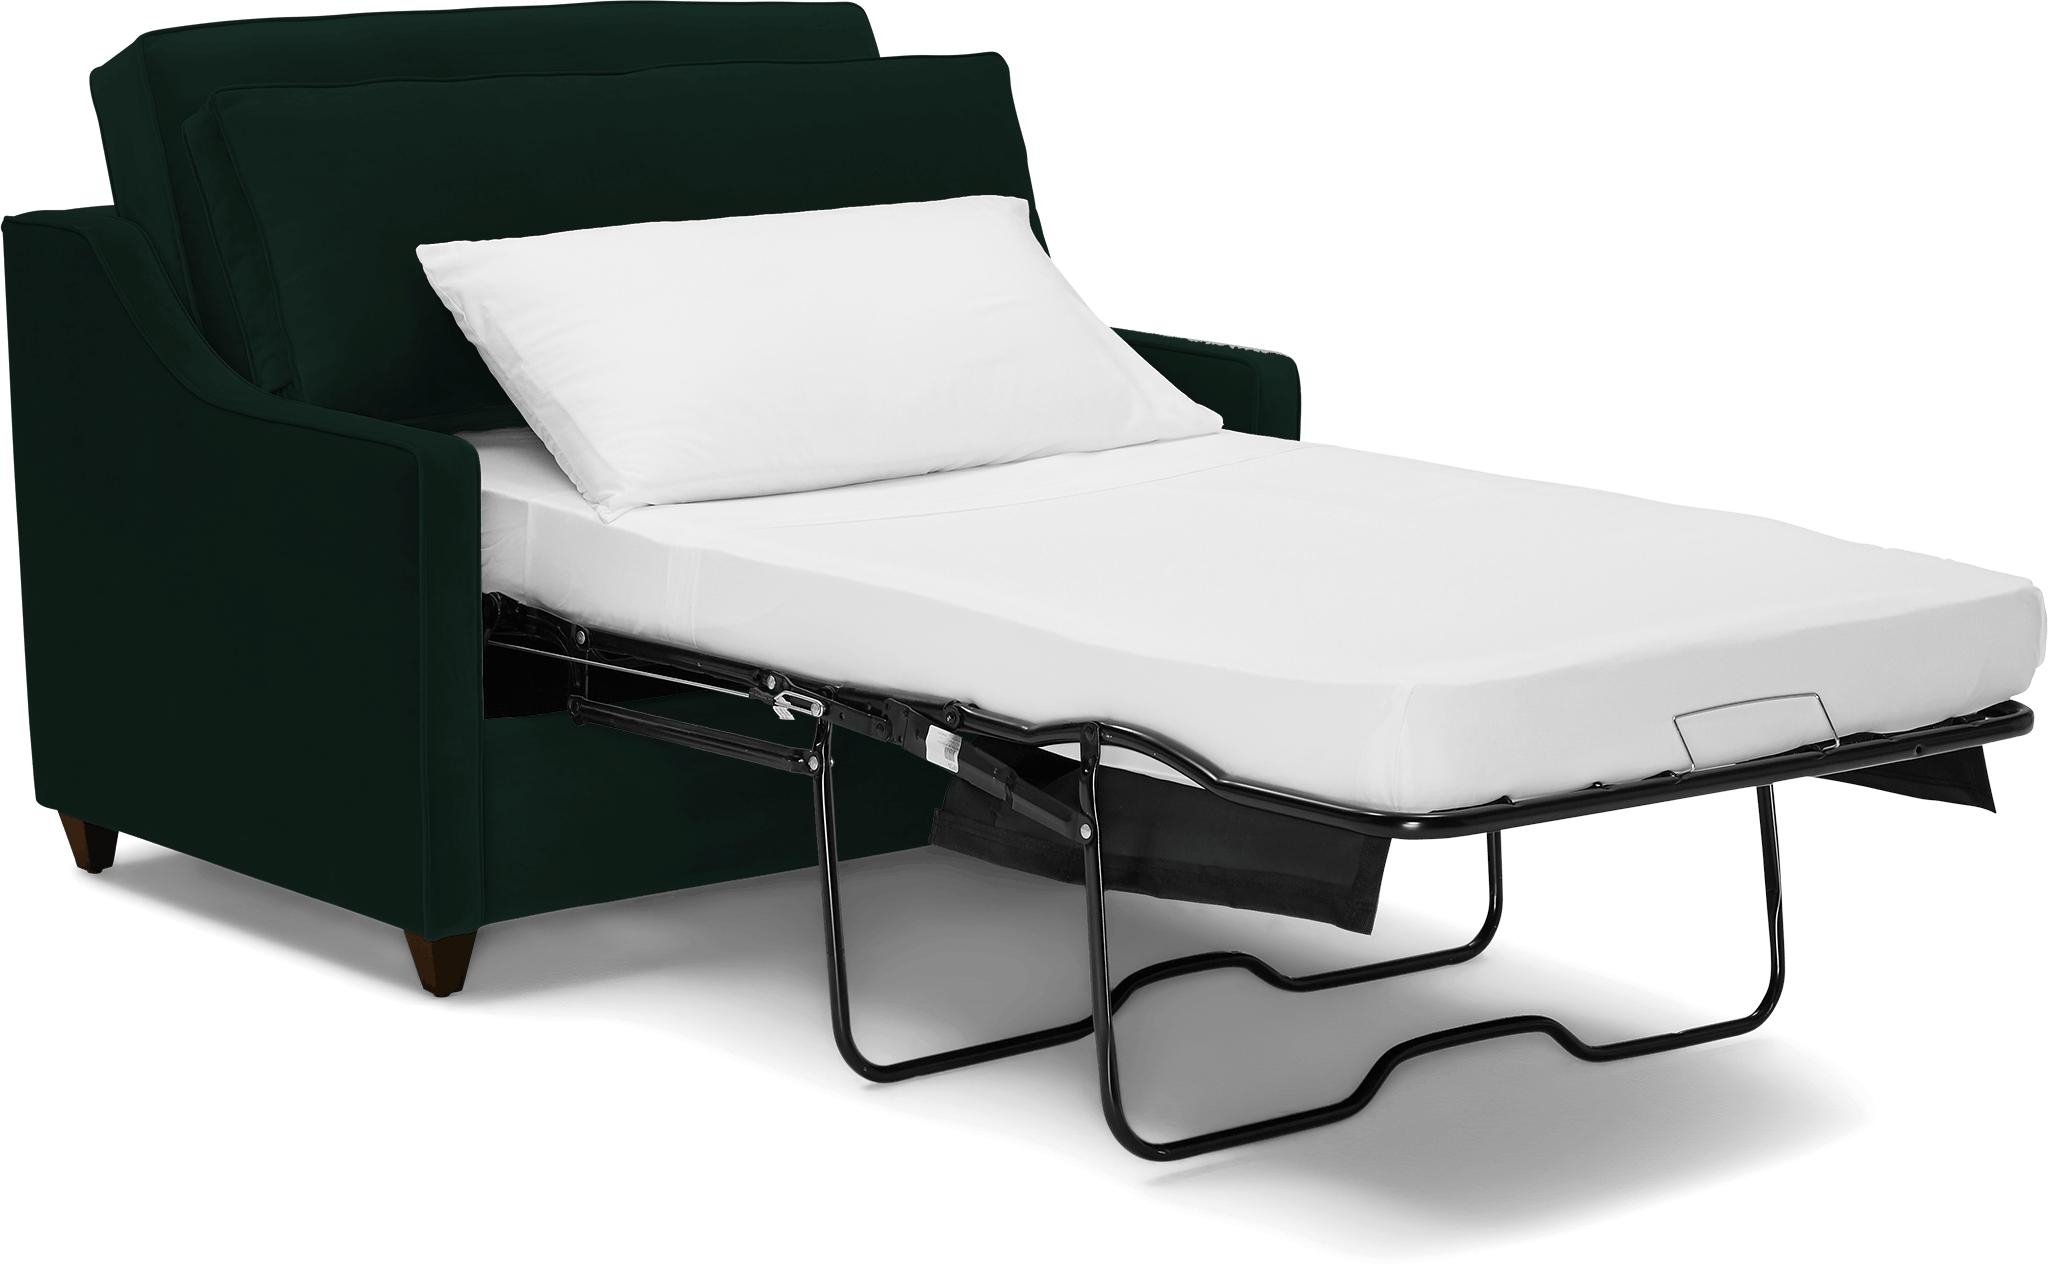 Green Brooks Mid Century Modern Twin Sleeper Sofa - Royale Evergreen - Mocha - Image 2